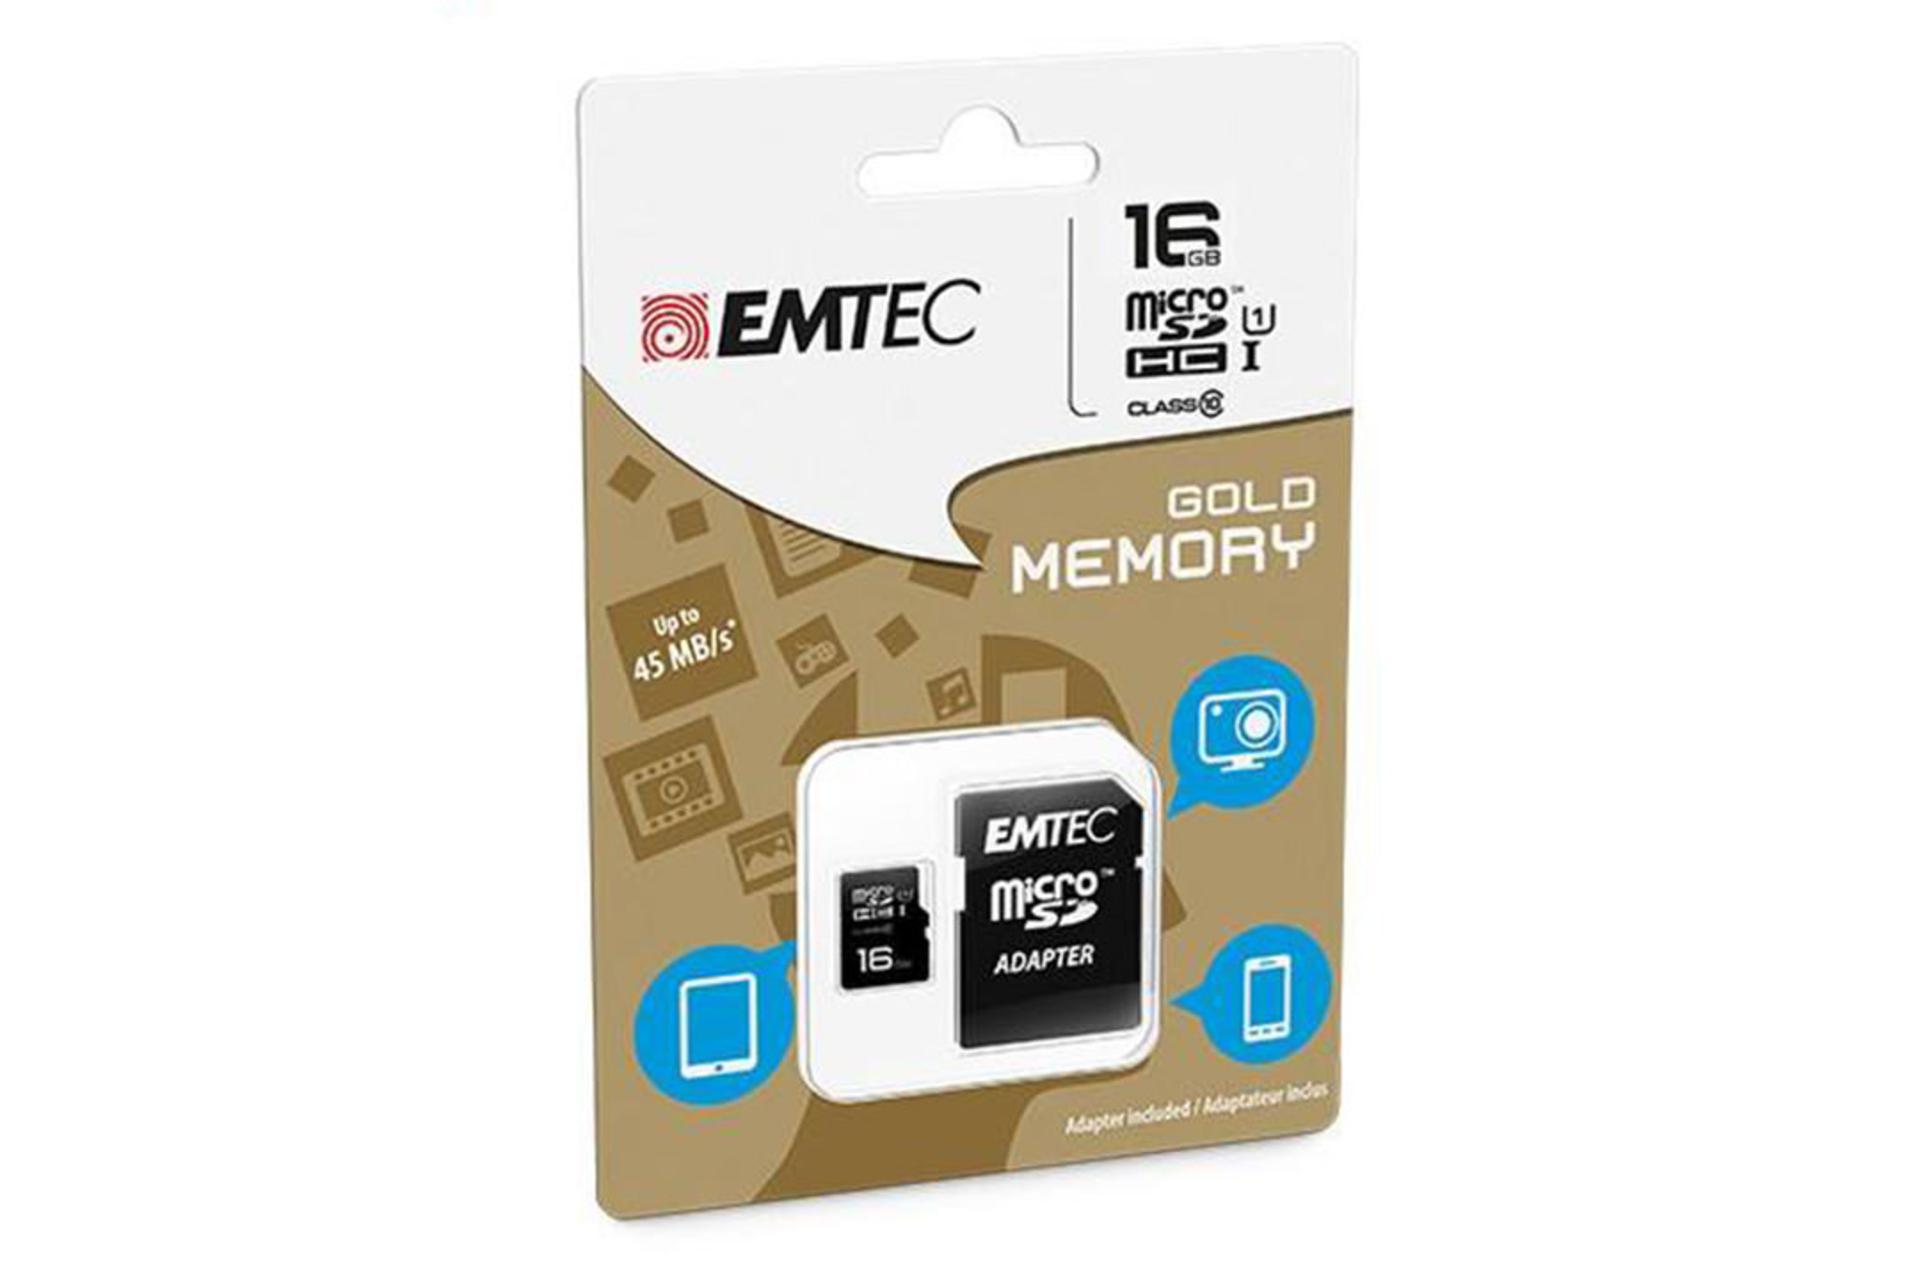 Emtec Gold microSDHC Class 10 UHS-I U1 16GB